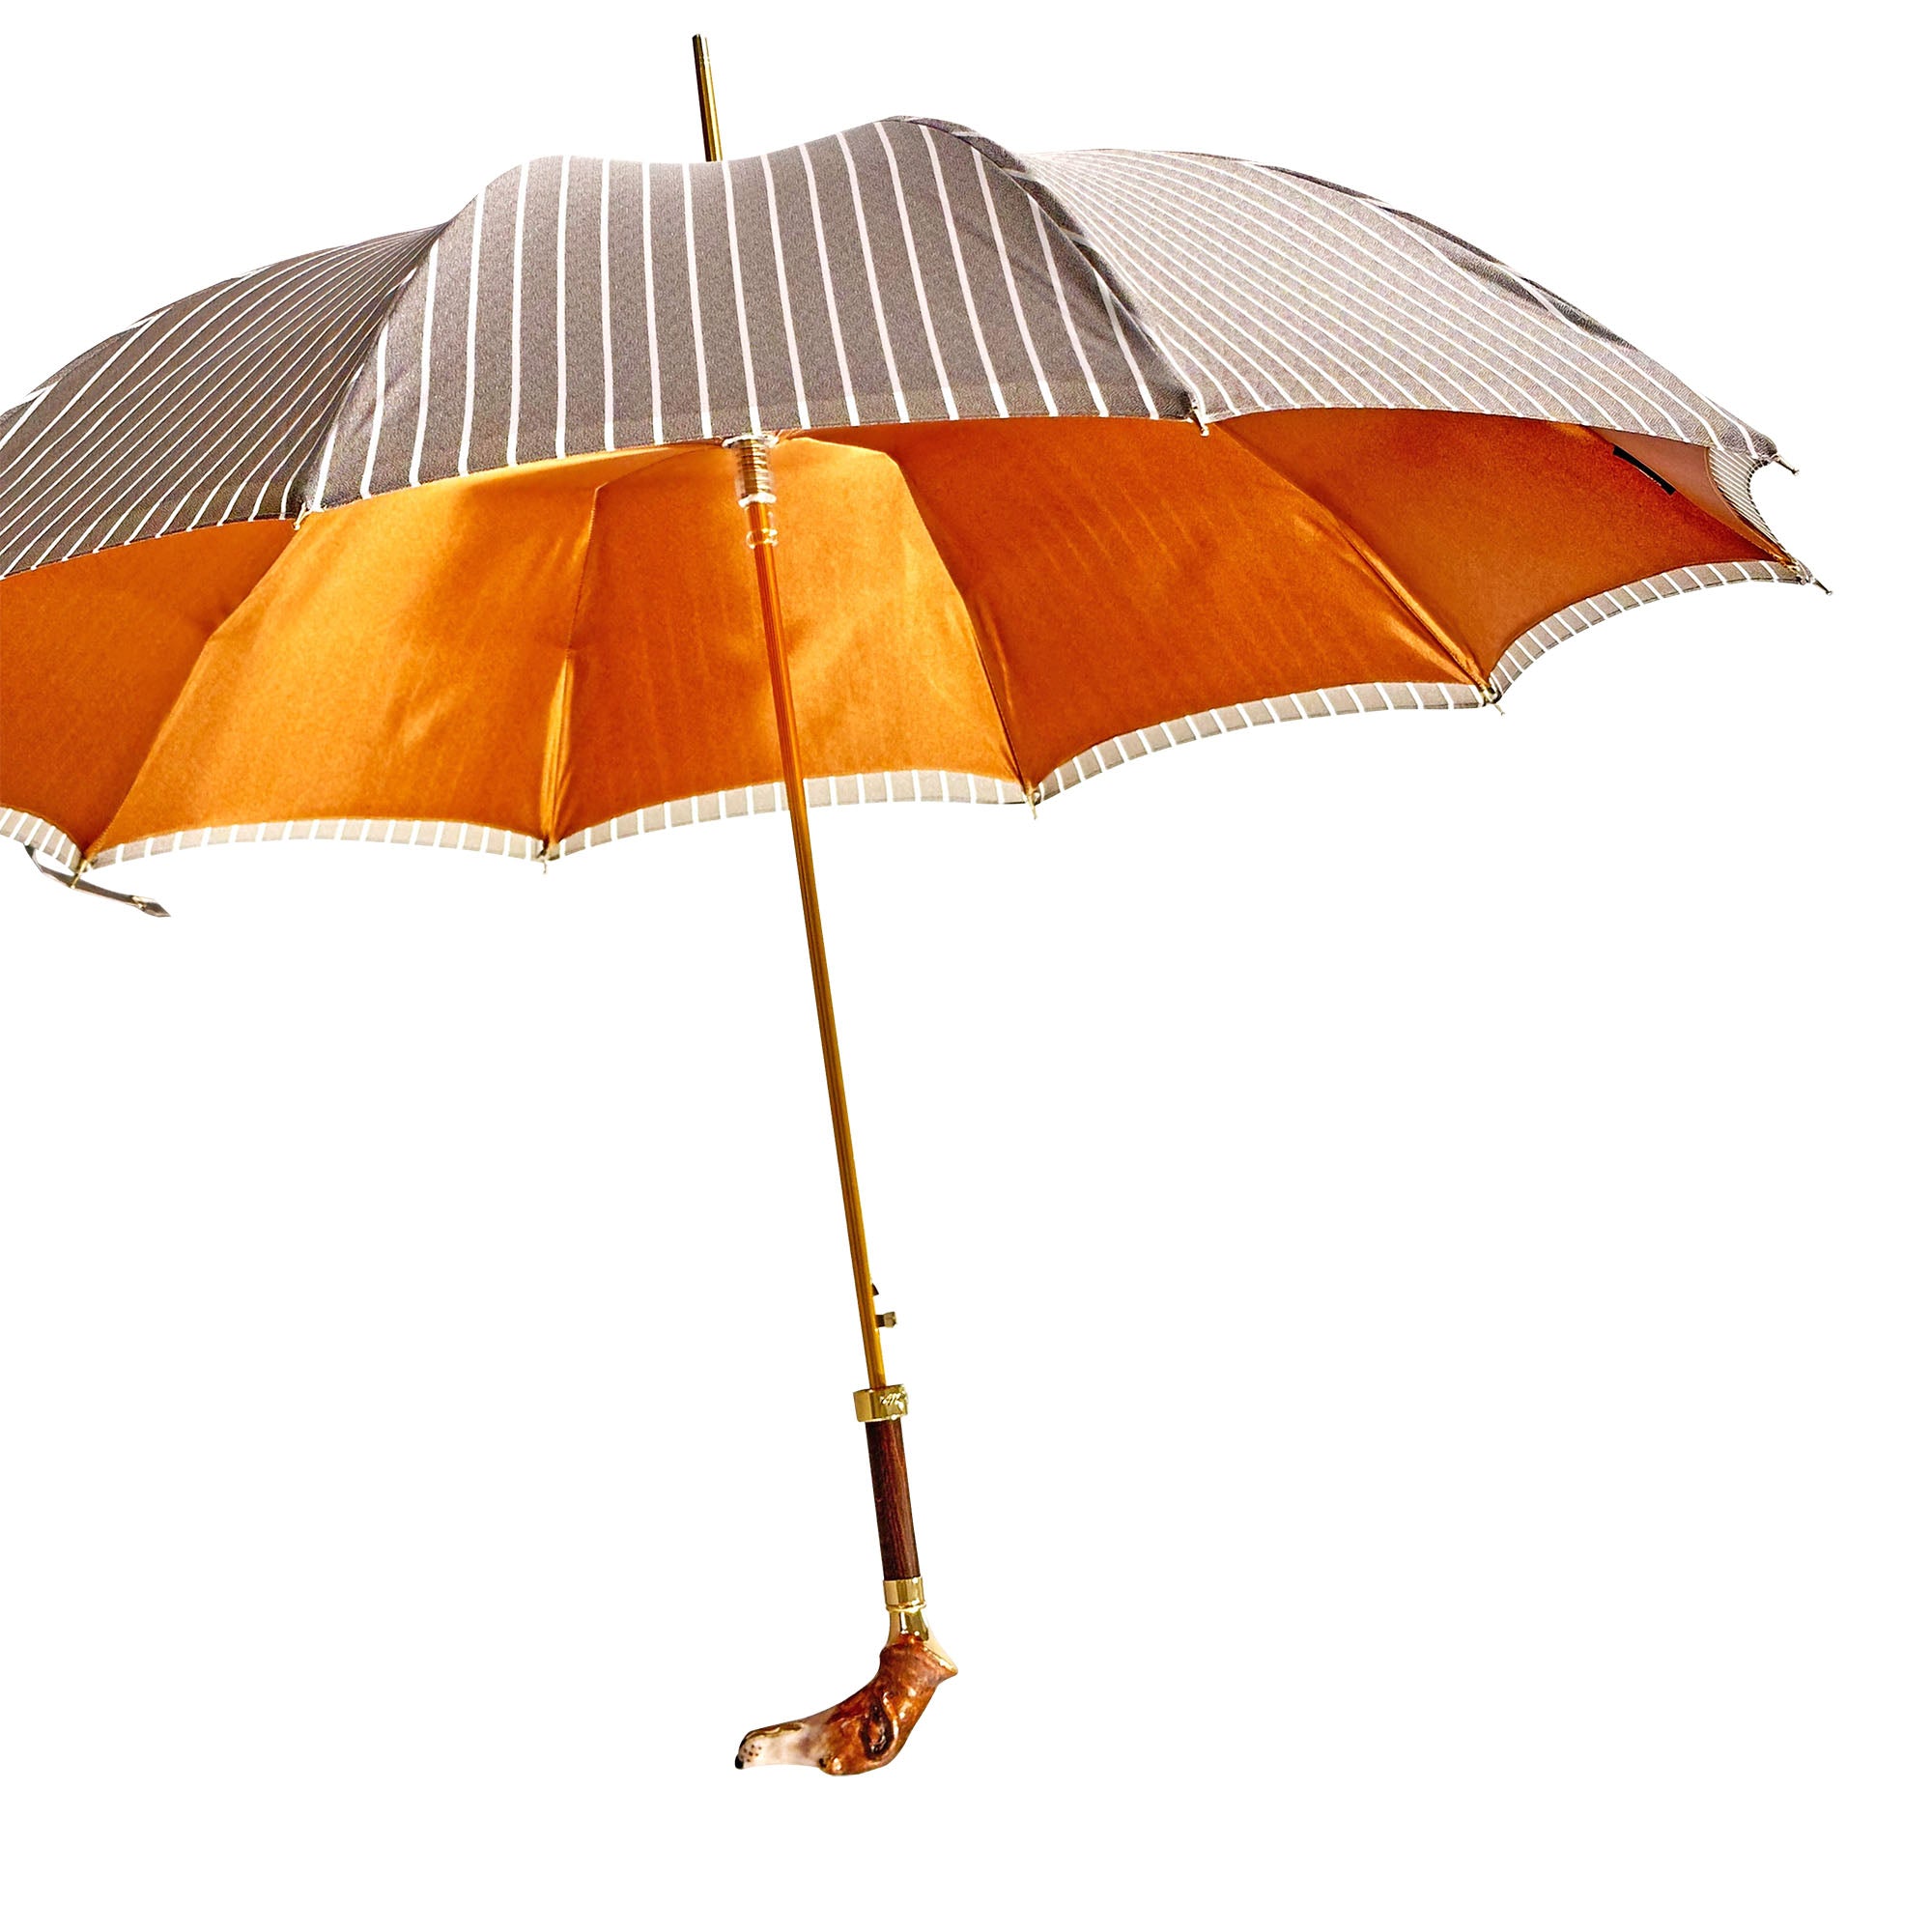 Exclusive striped umbrella - hand-painted greyhound umbrella